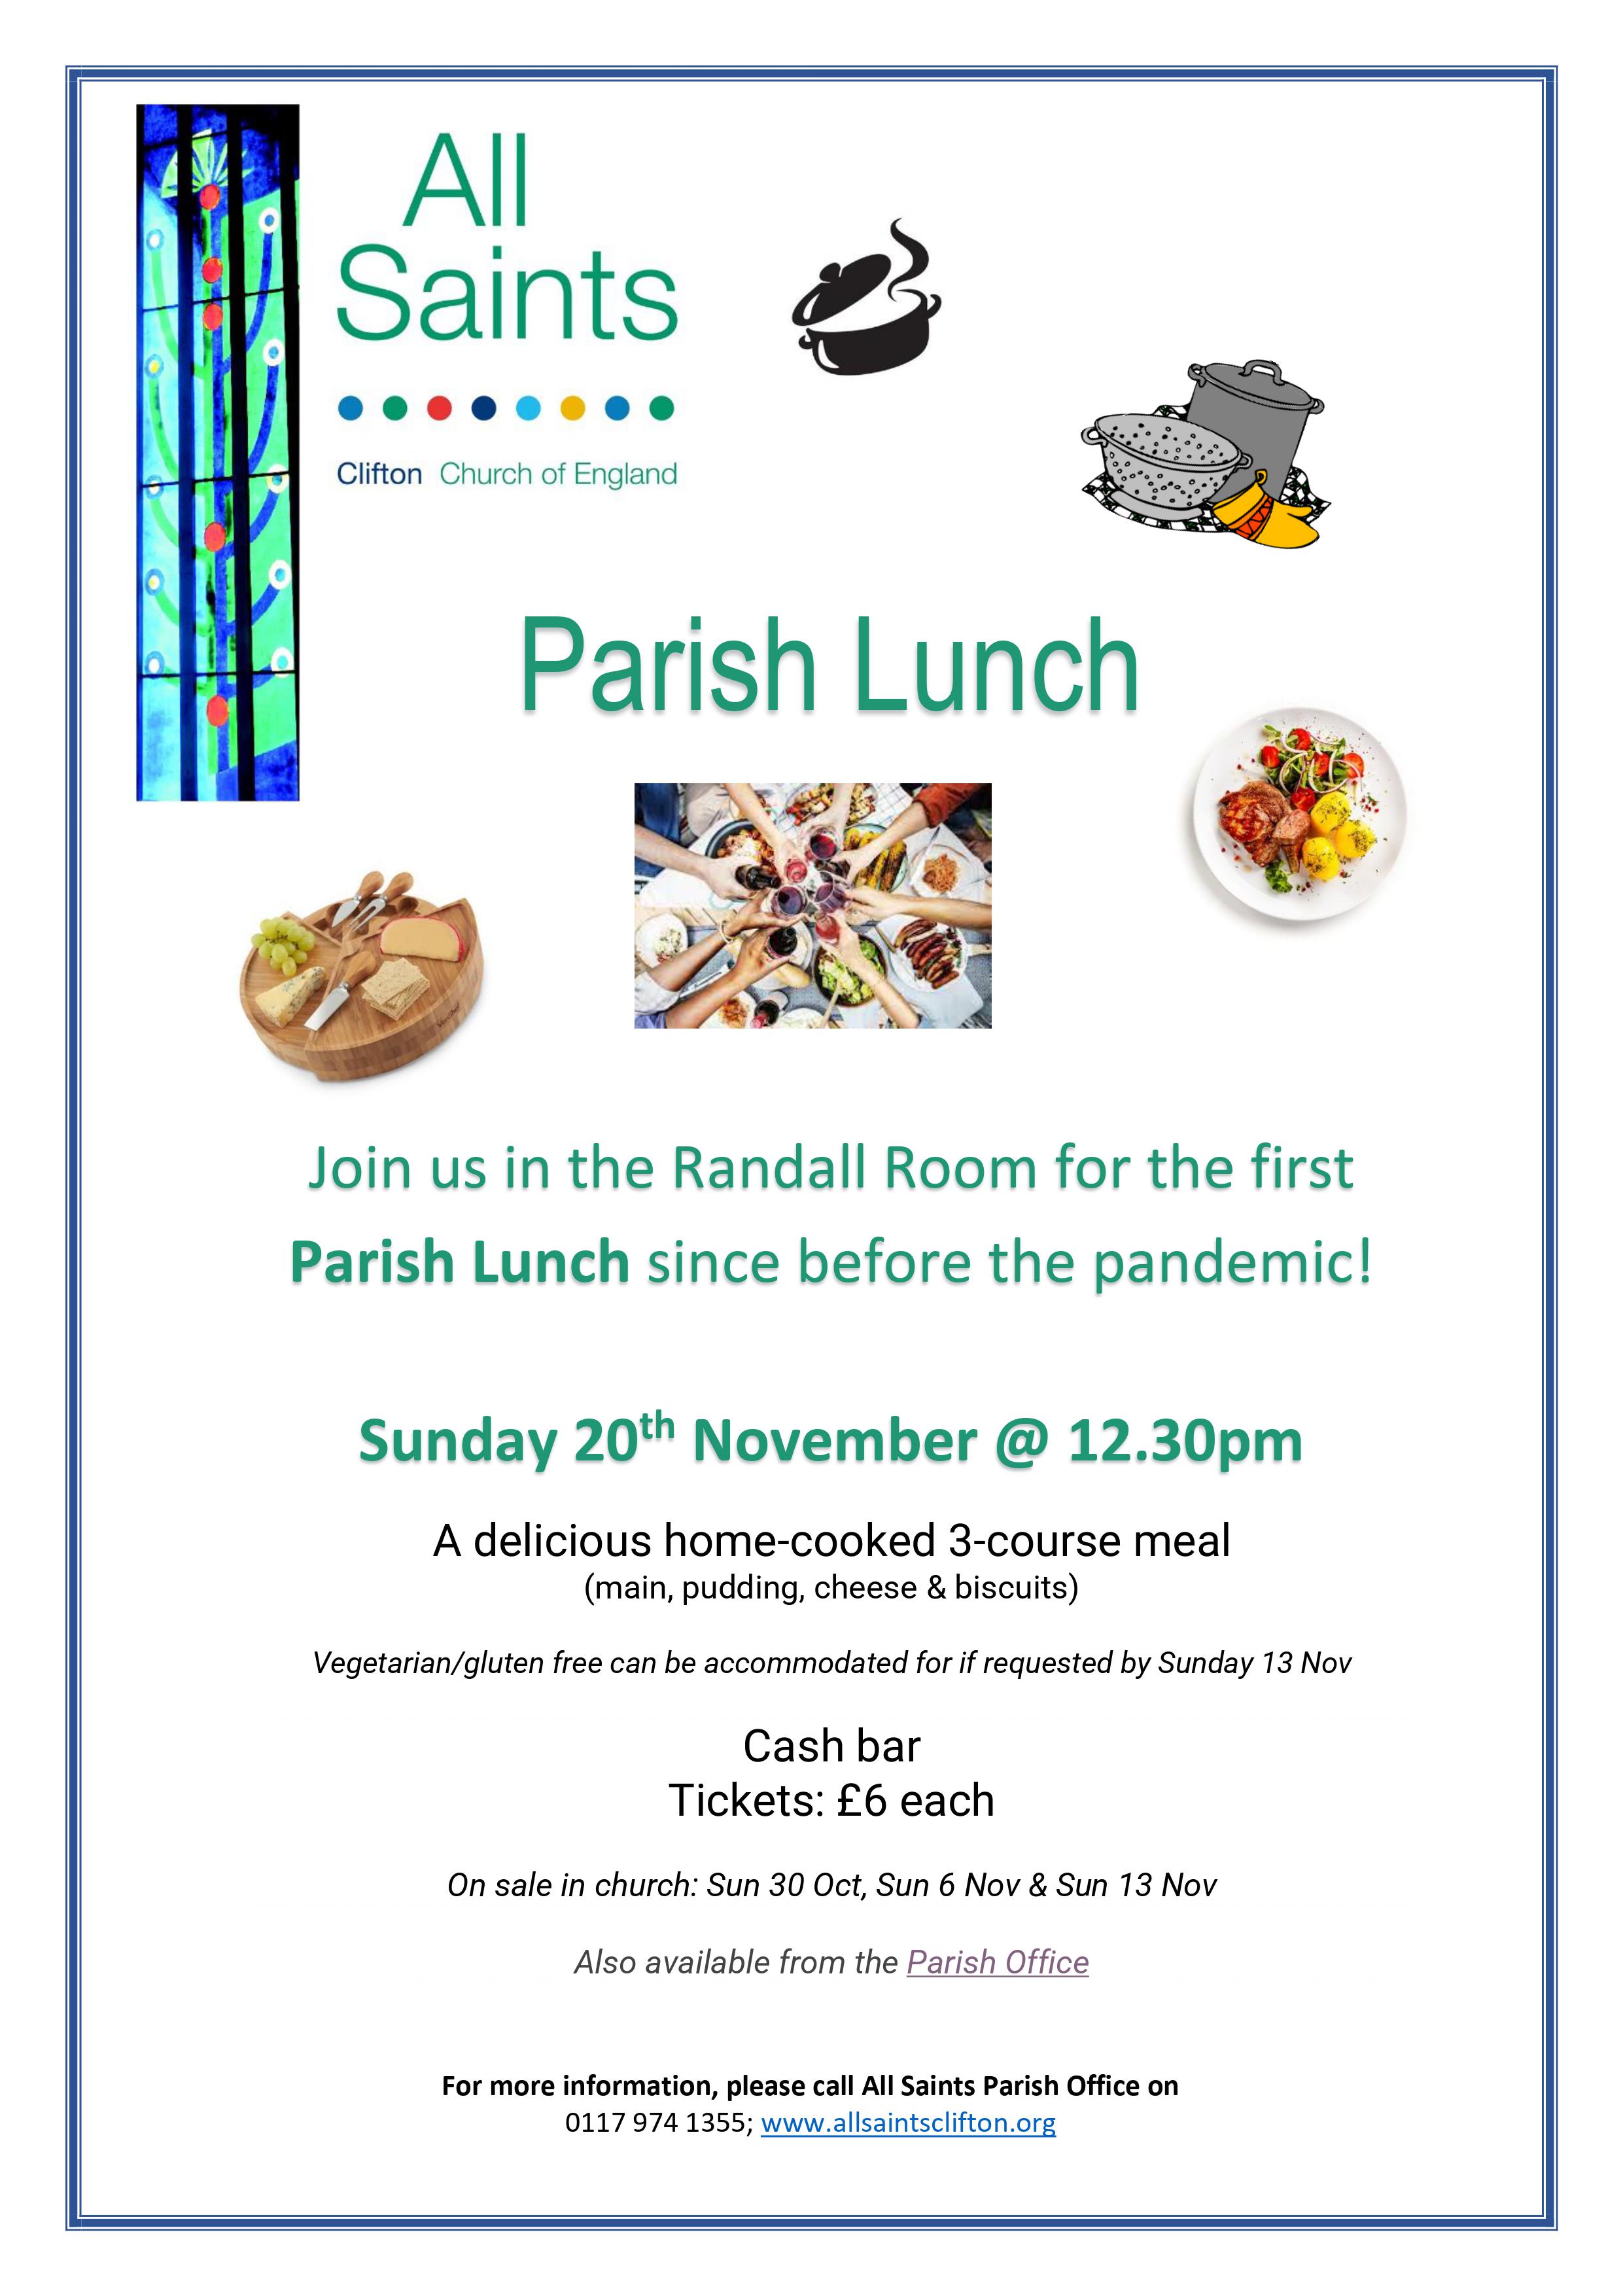 Parish Lunch 20 Nov 22 poster 